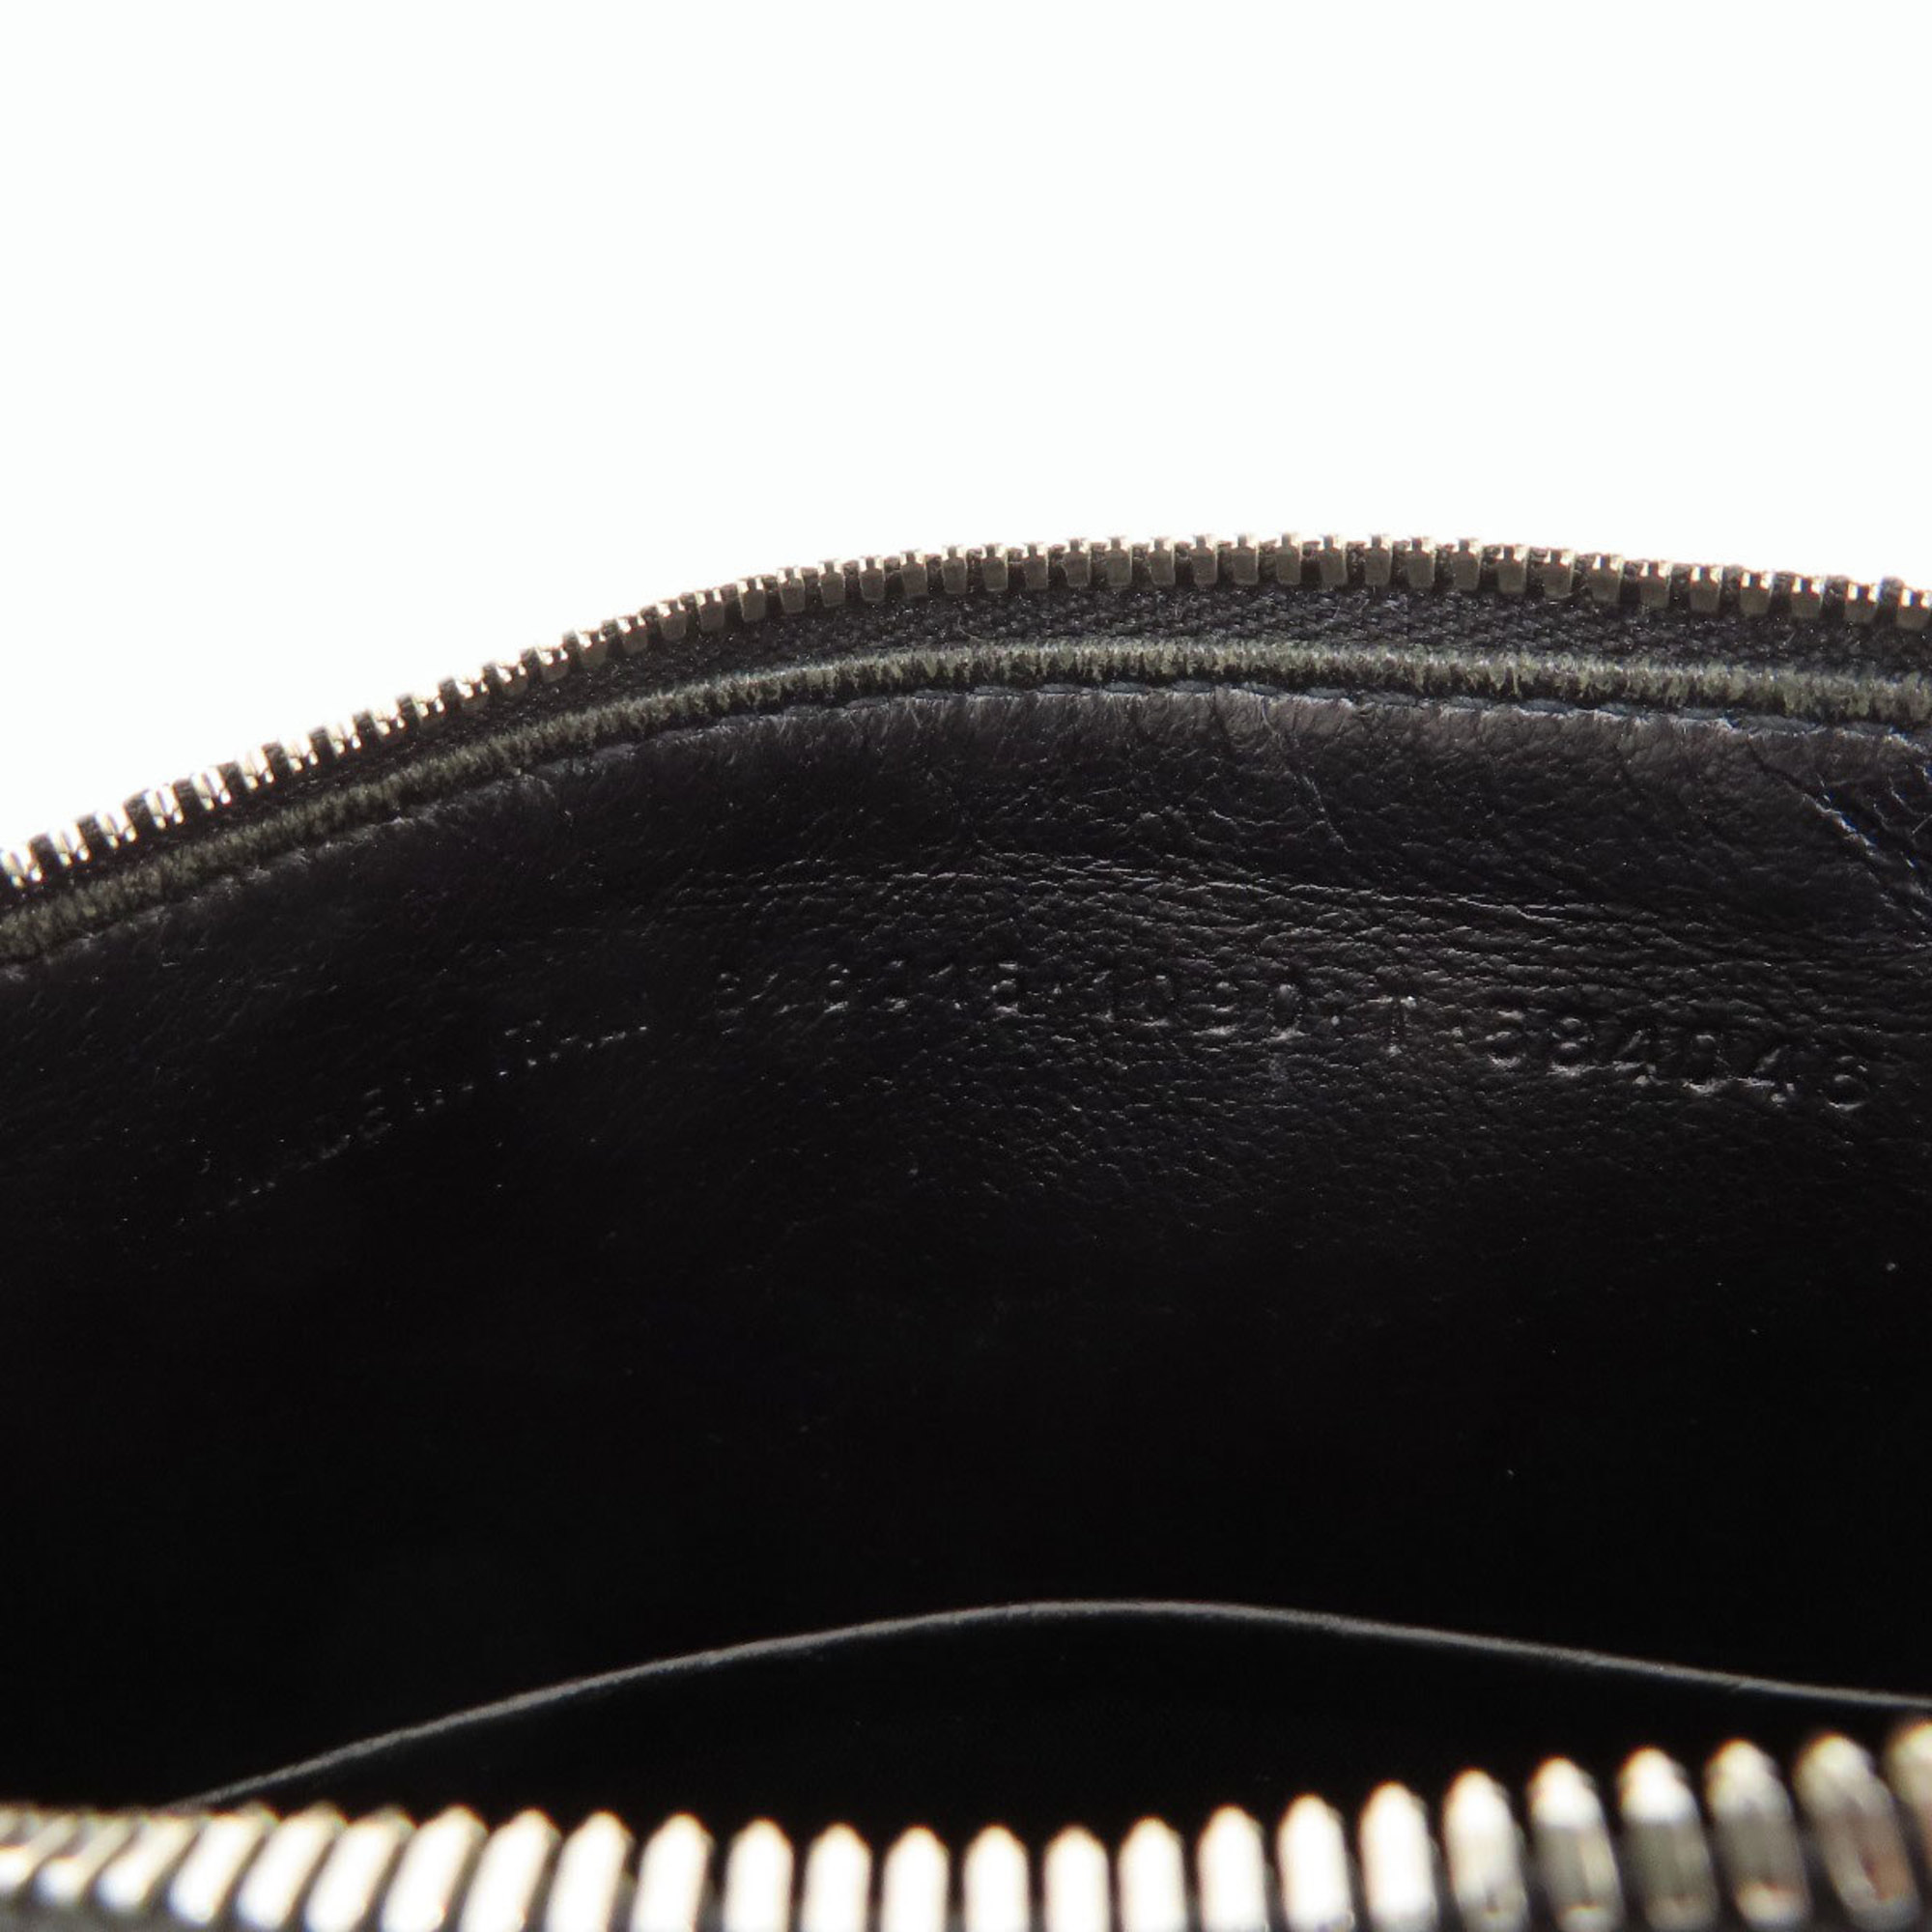 BALENCIAGA 616015 Pouch Leather Women's